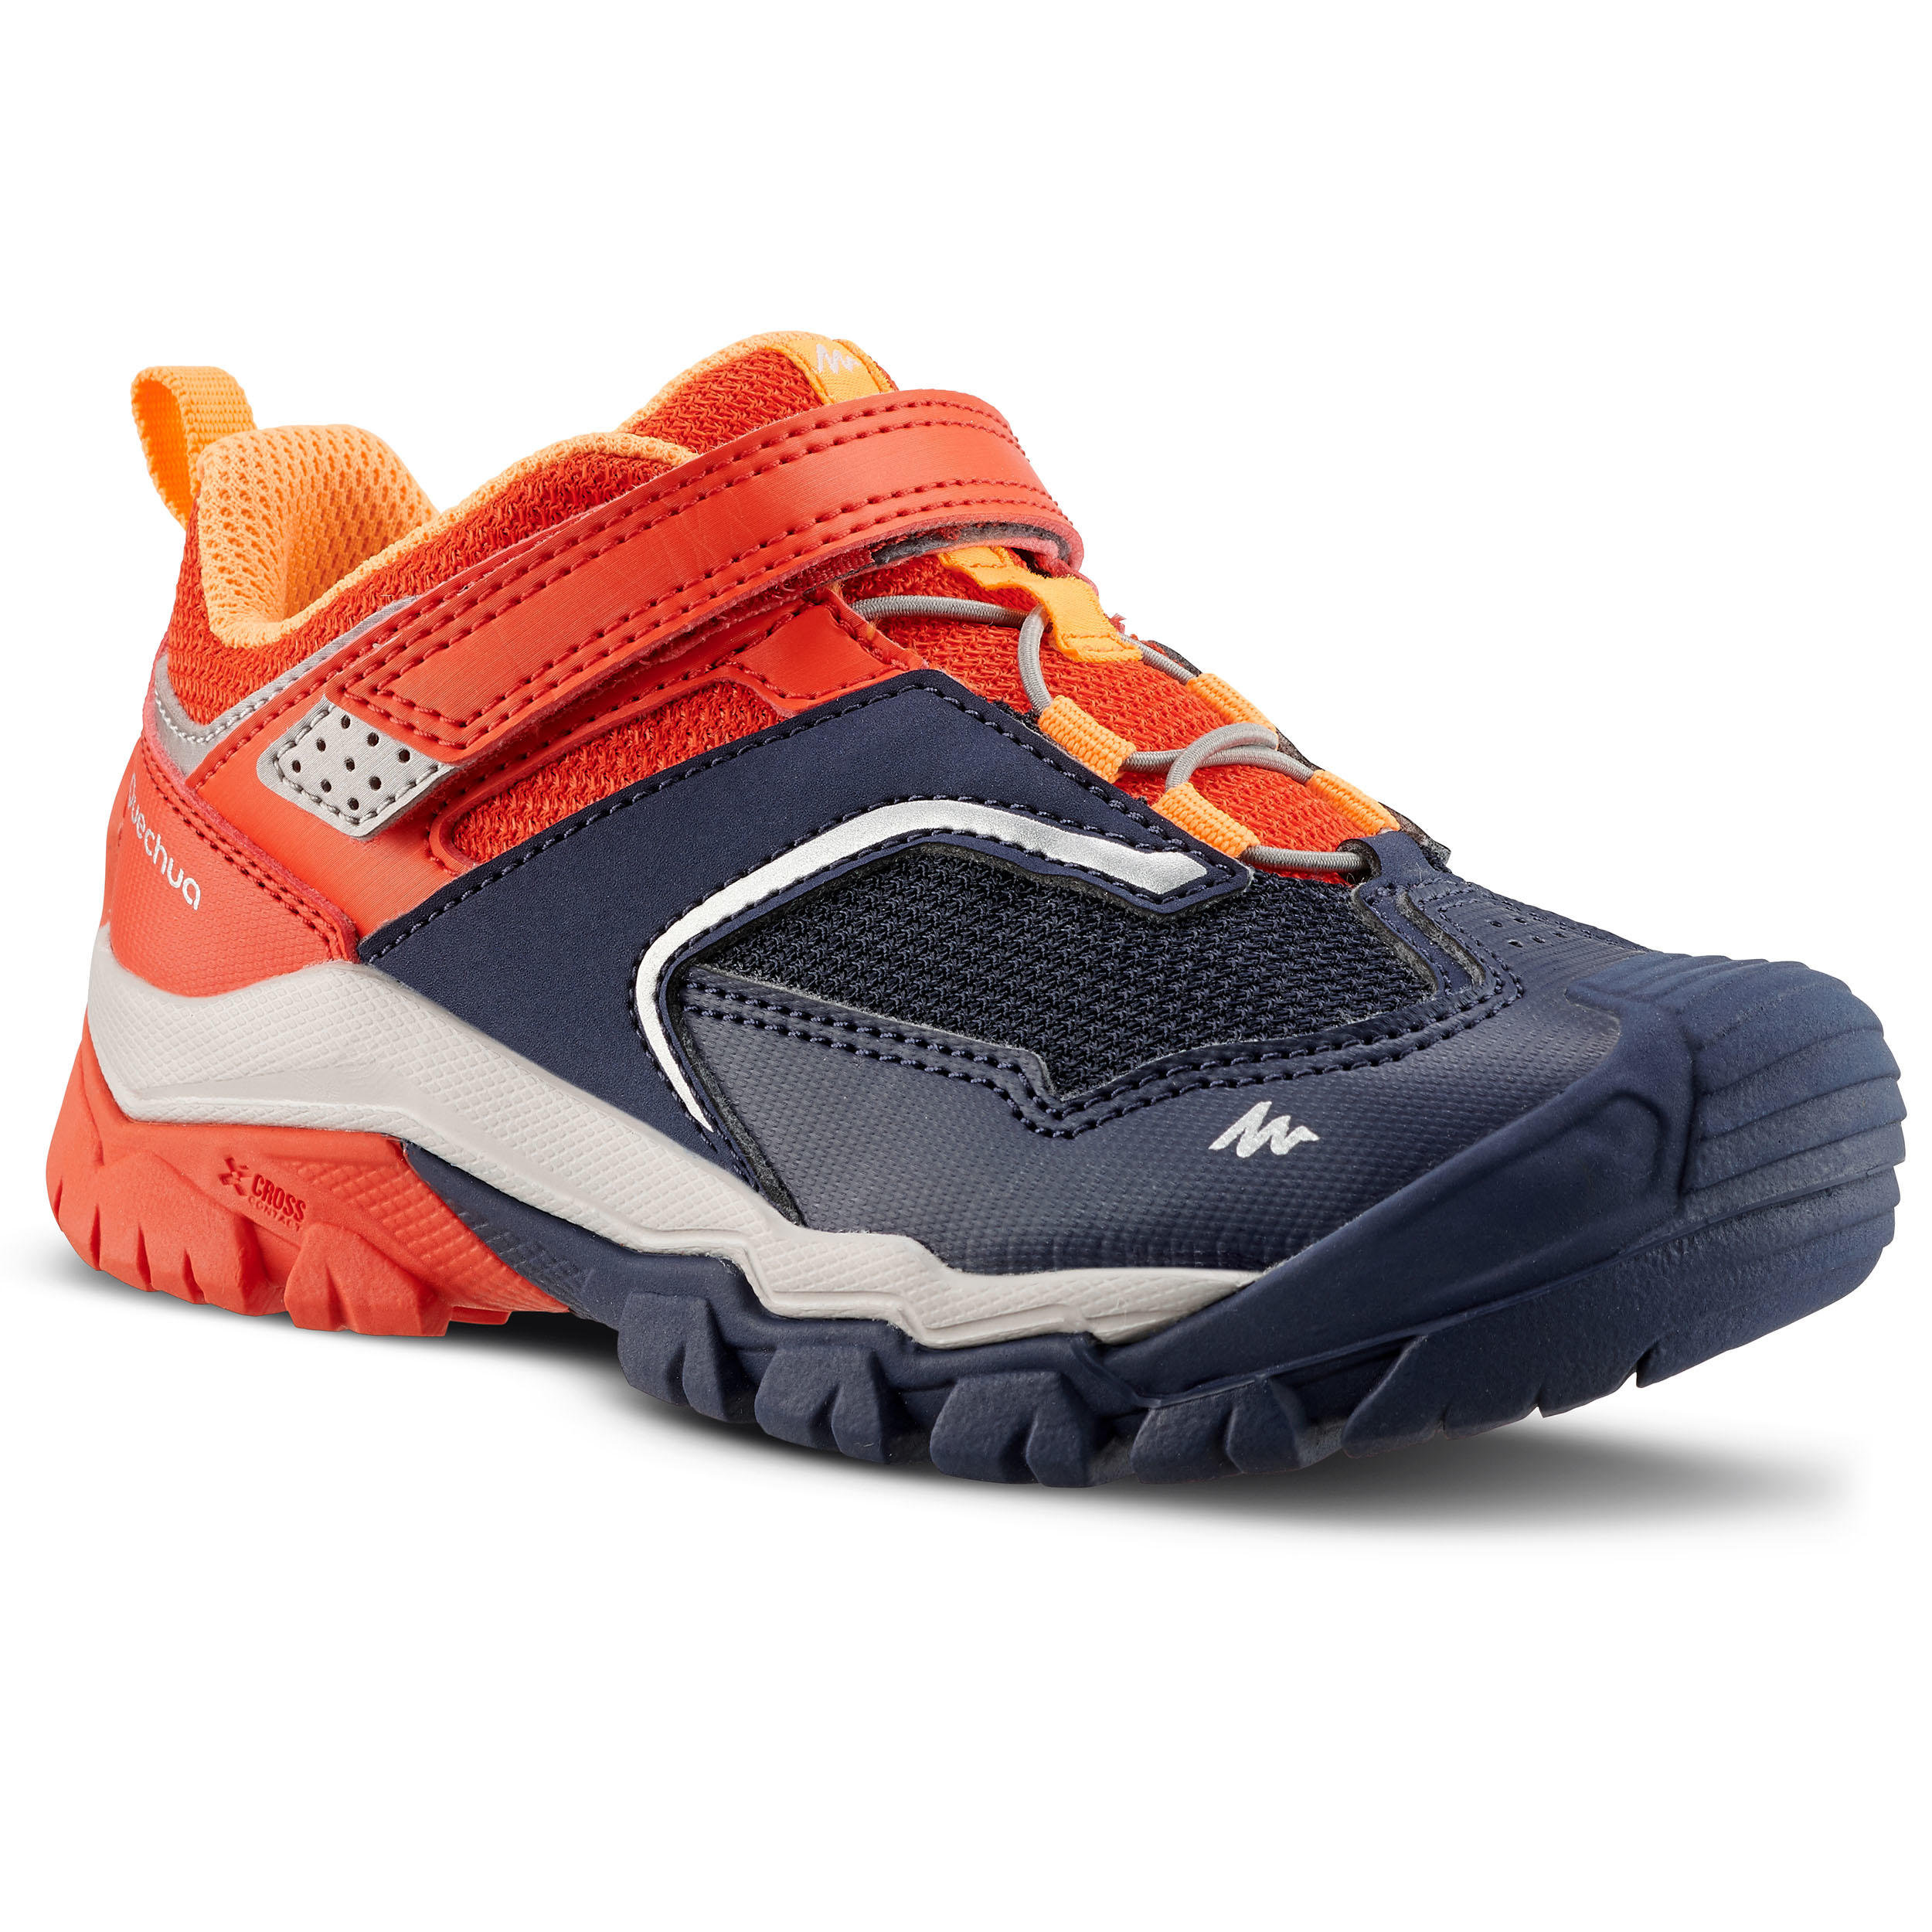 QUECHUA Kids' Low Top Walking Shoes Sizes 24-34 - Blue/Red